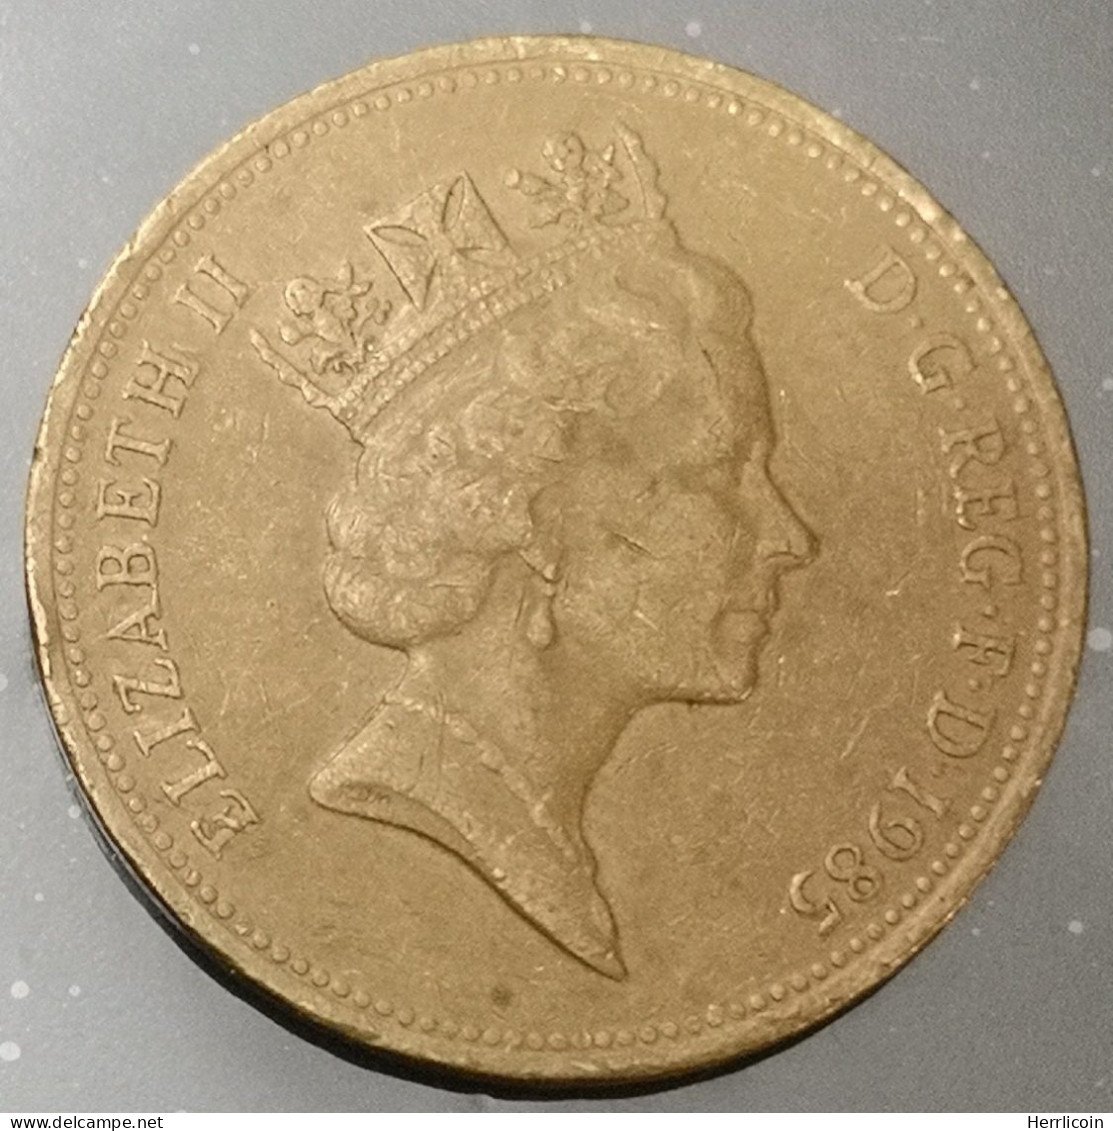 Monnaie Royaume Uni - 1985 - 2 Pence Elizabeth II 3e Effigie, Bronze - 2 Pence & 2 New Pence